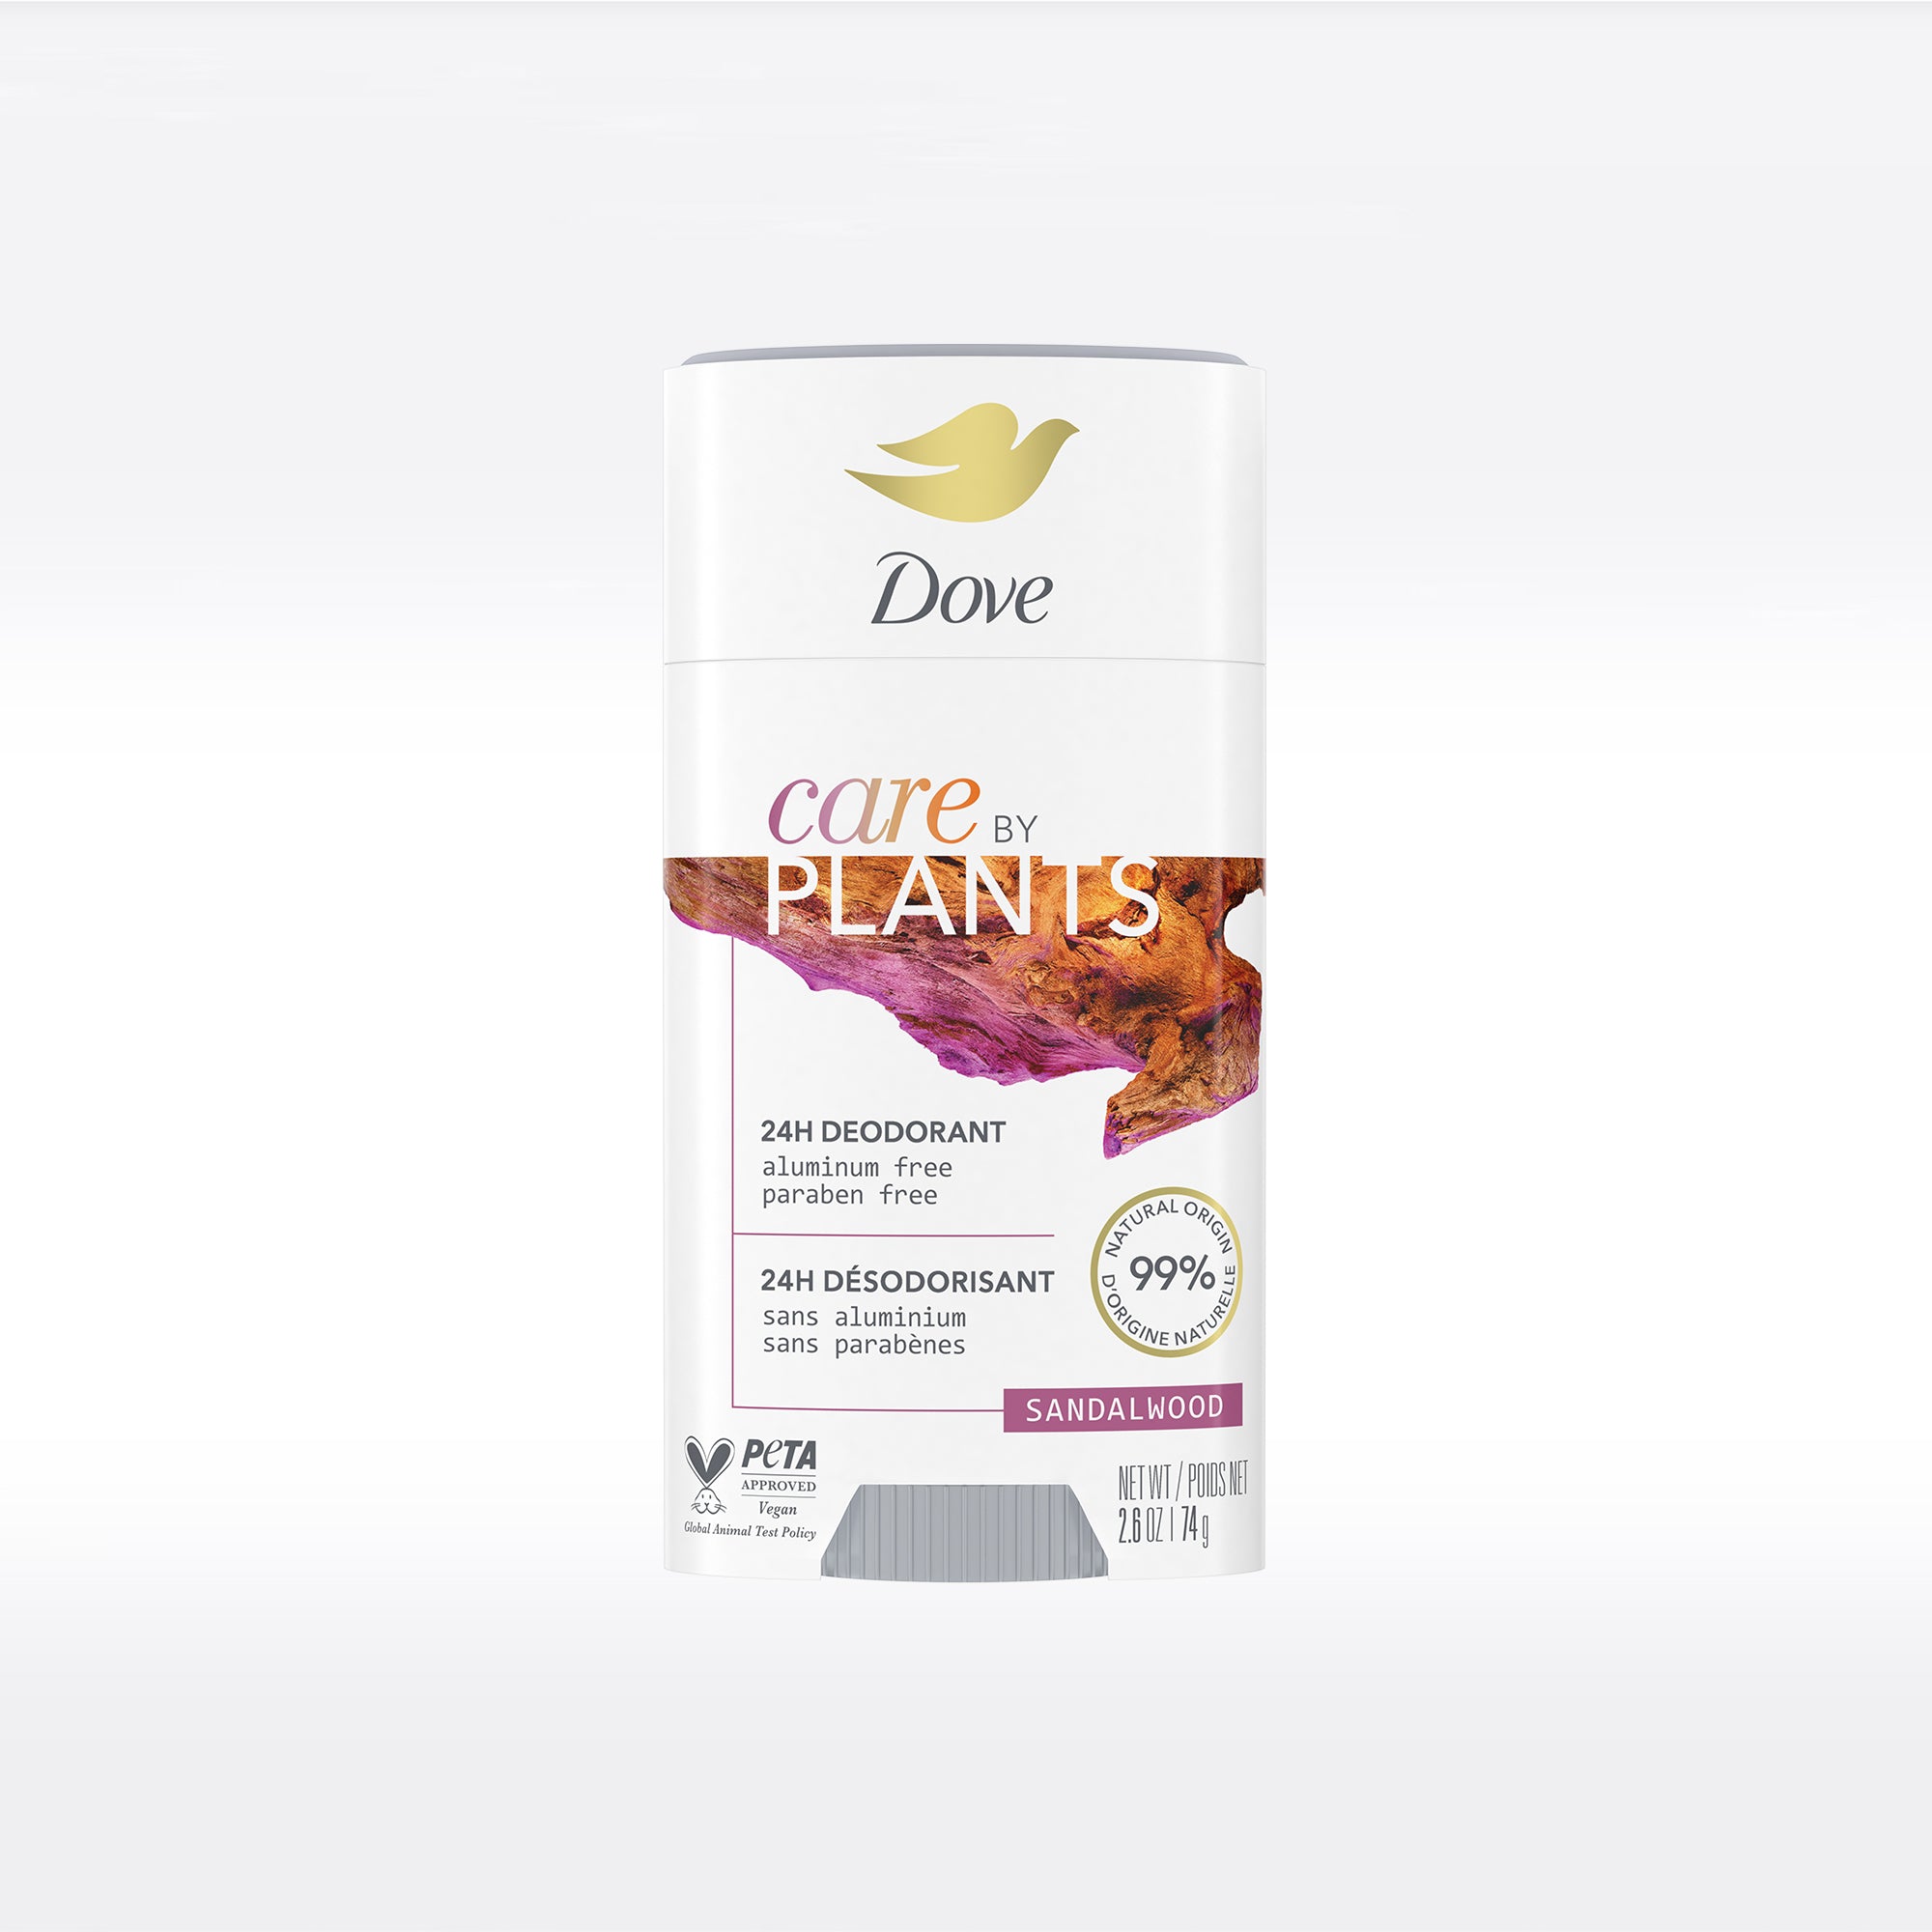 Dove Care by Plants Sandalwood Deodorant